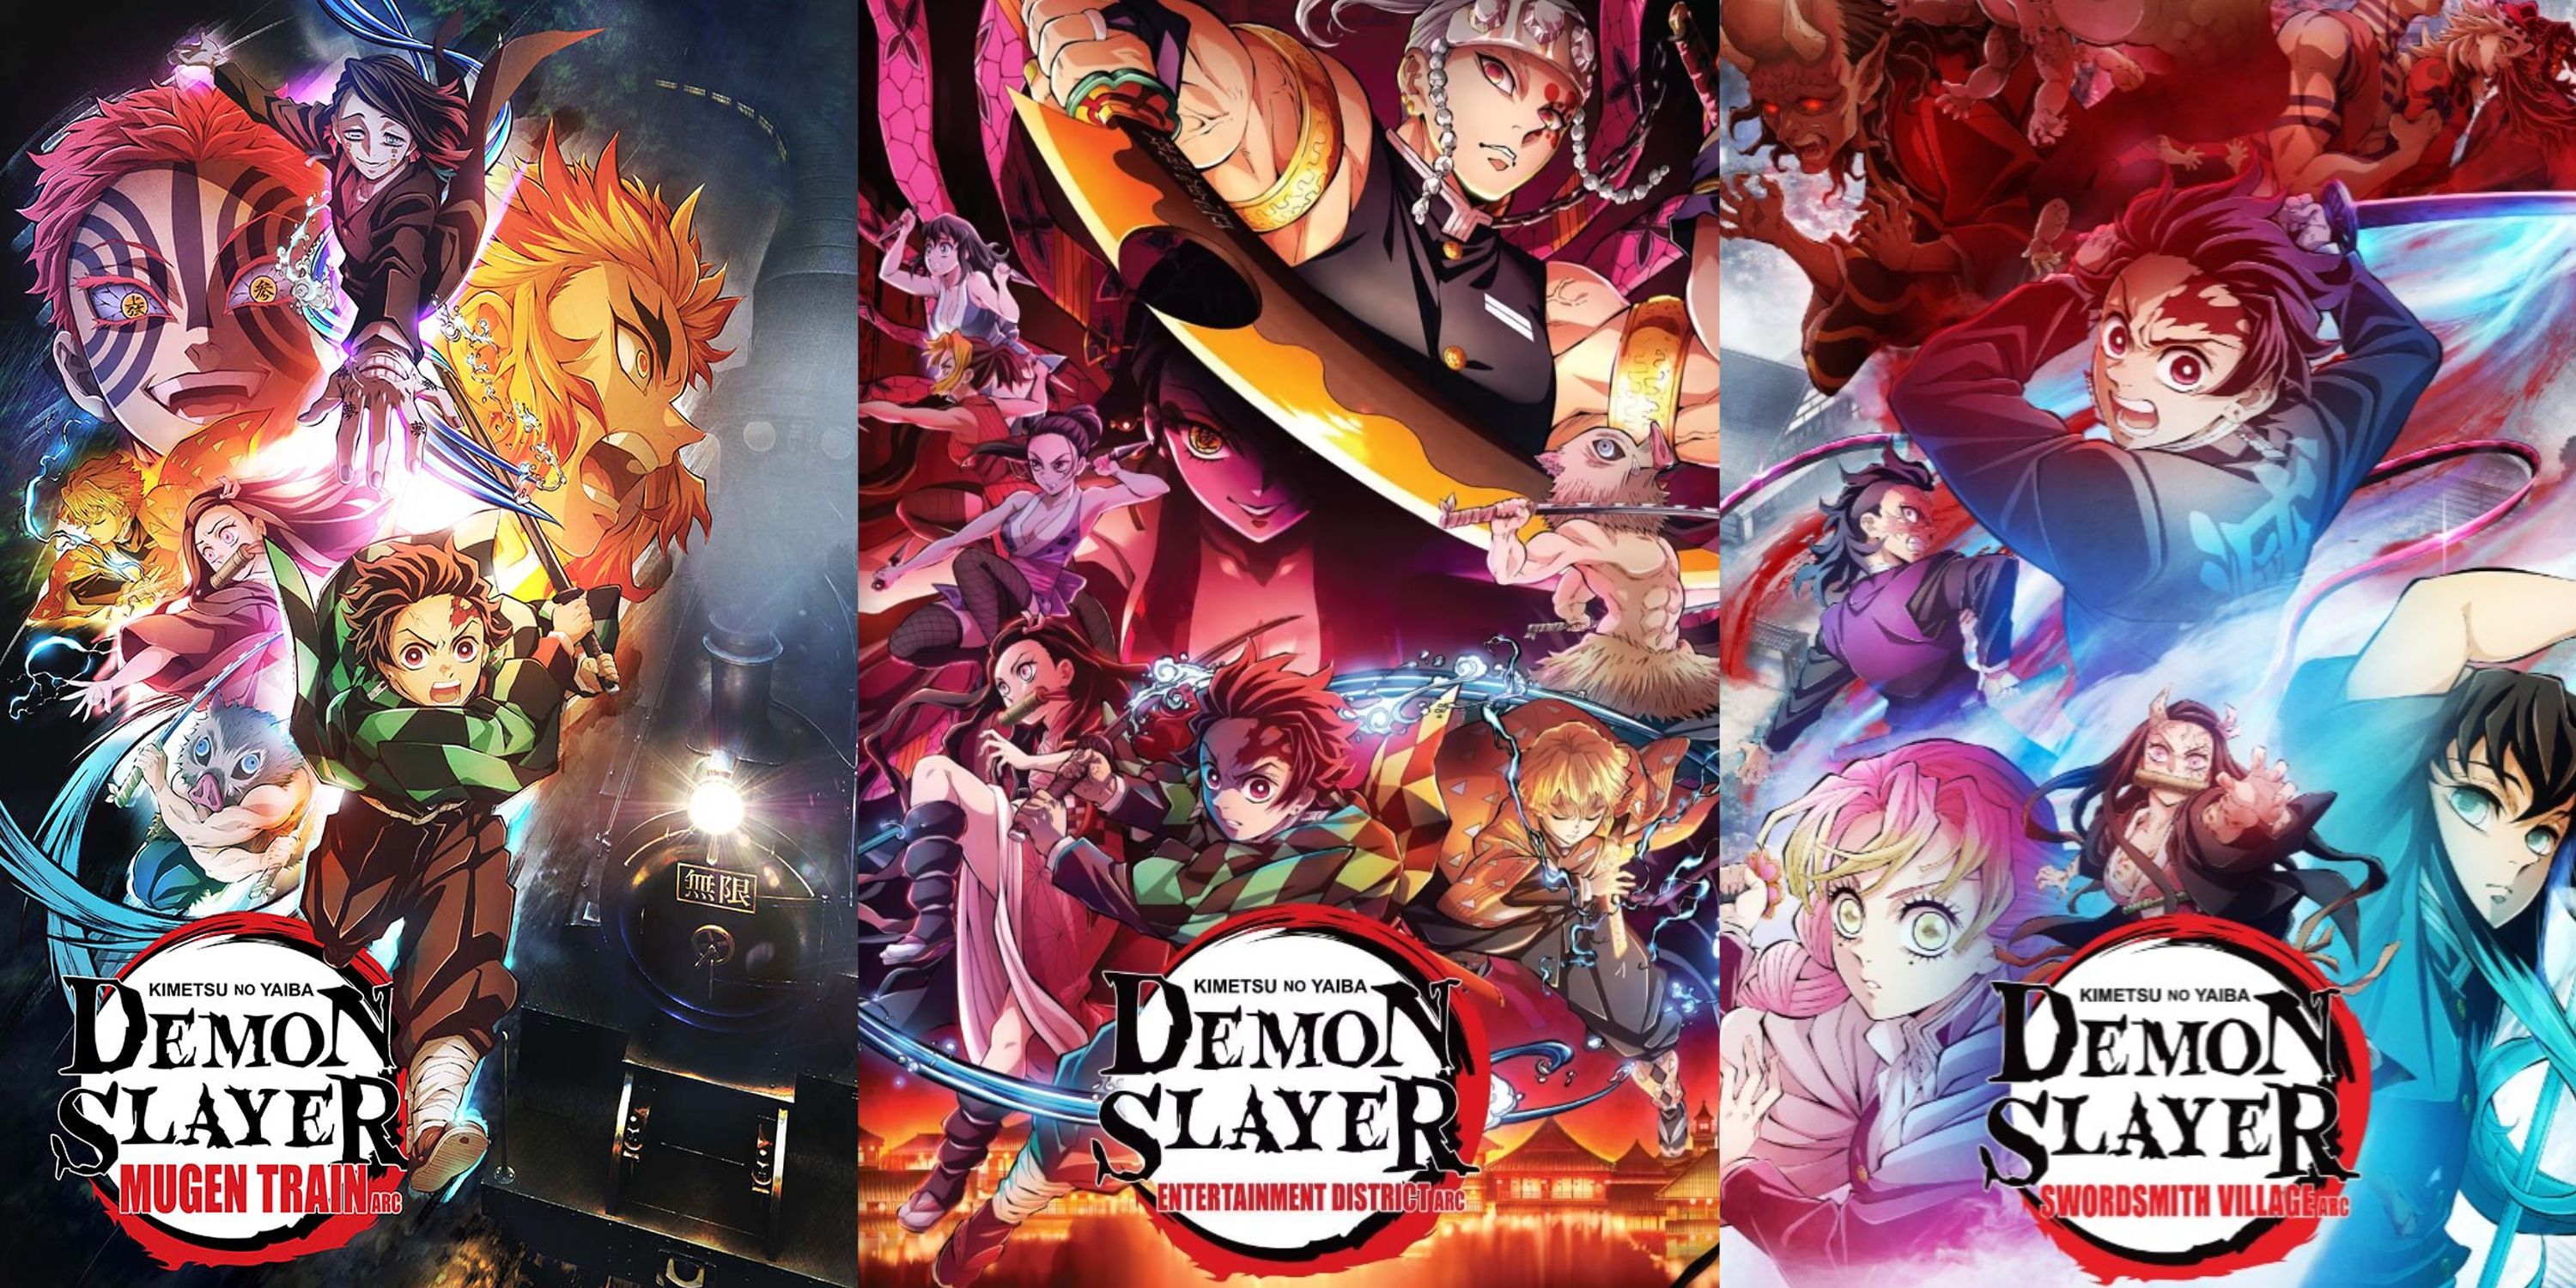 Demon Slayer Season 3 Episode 2 Review: Fighting To Achieve Strength